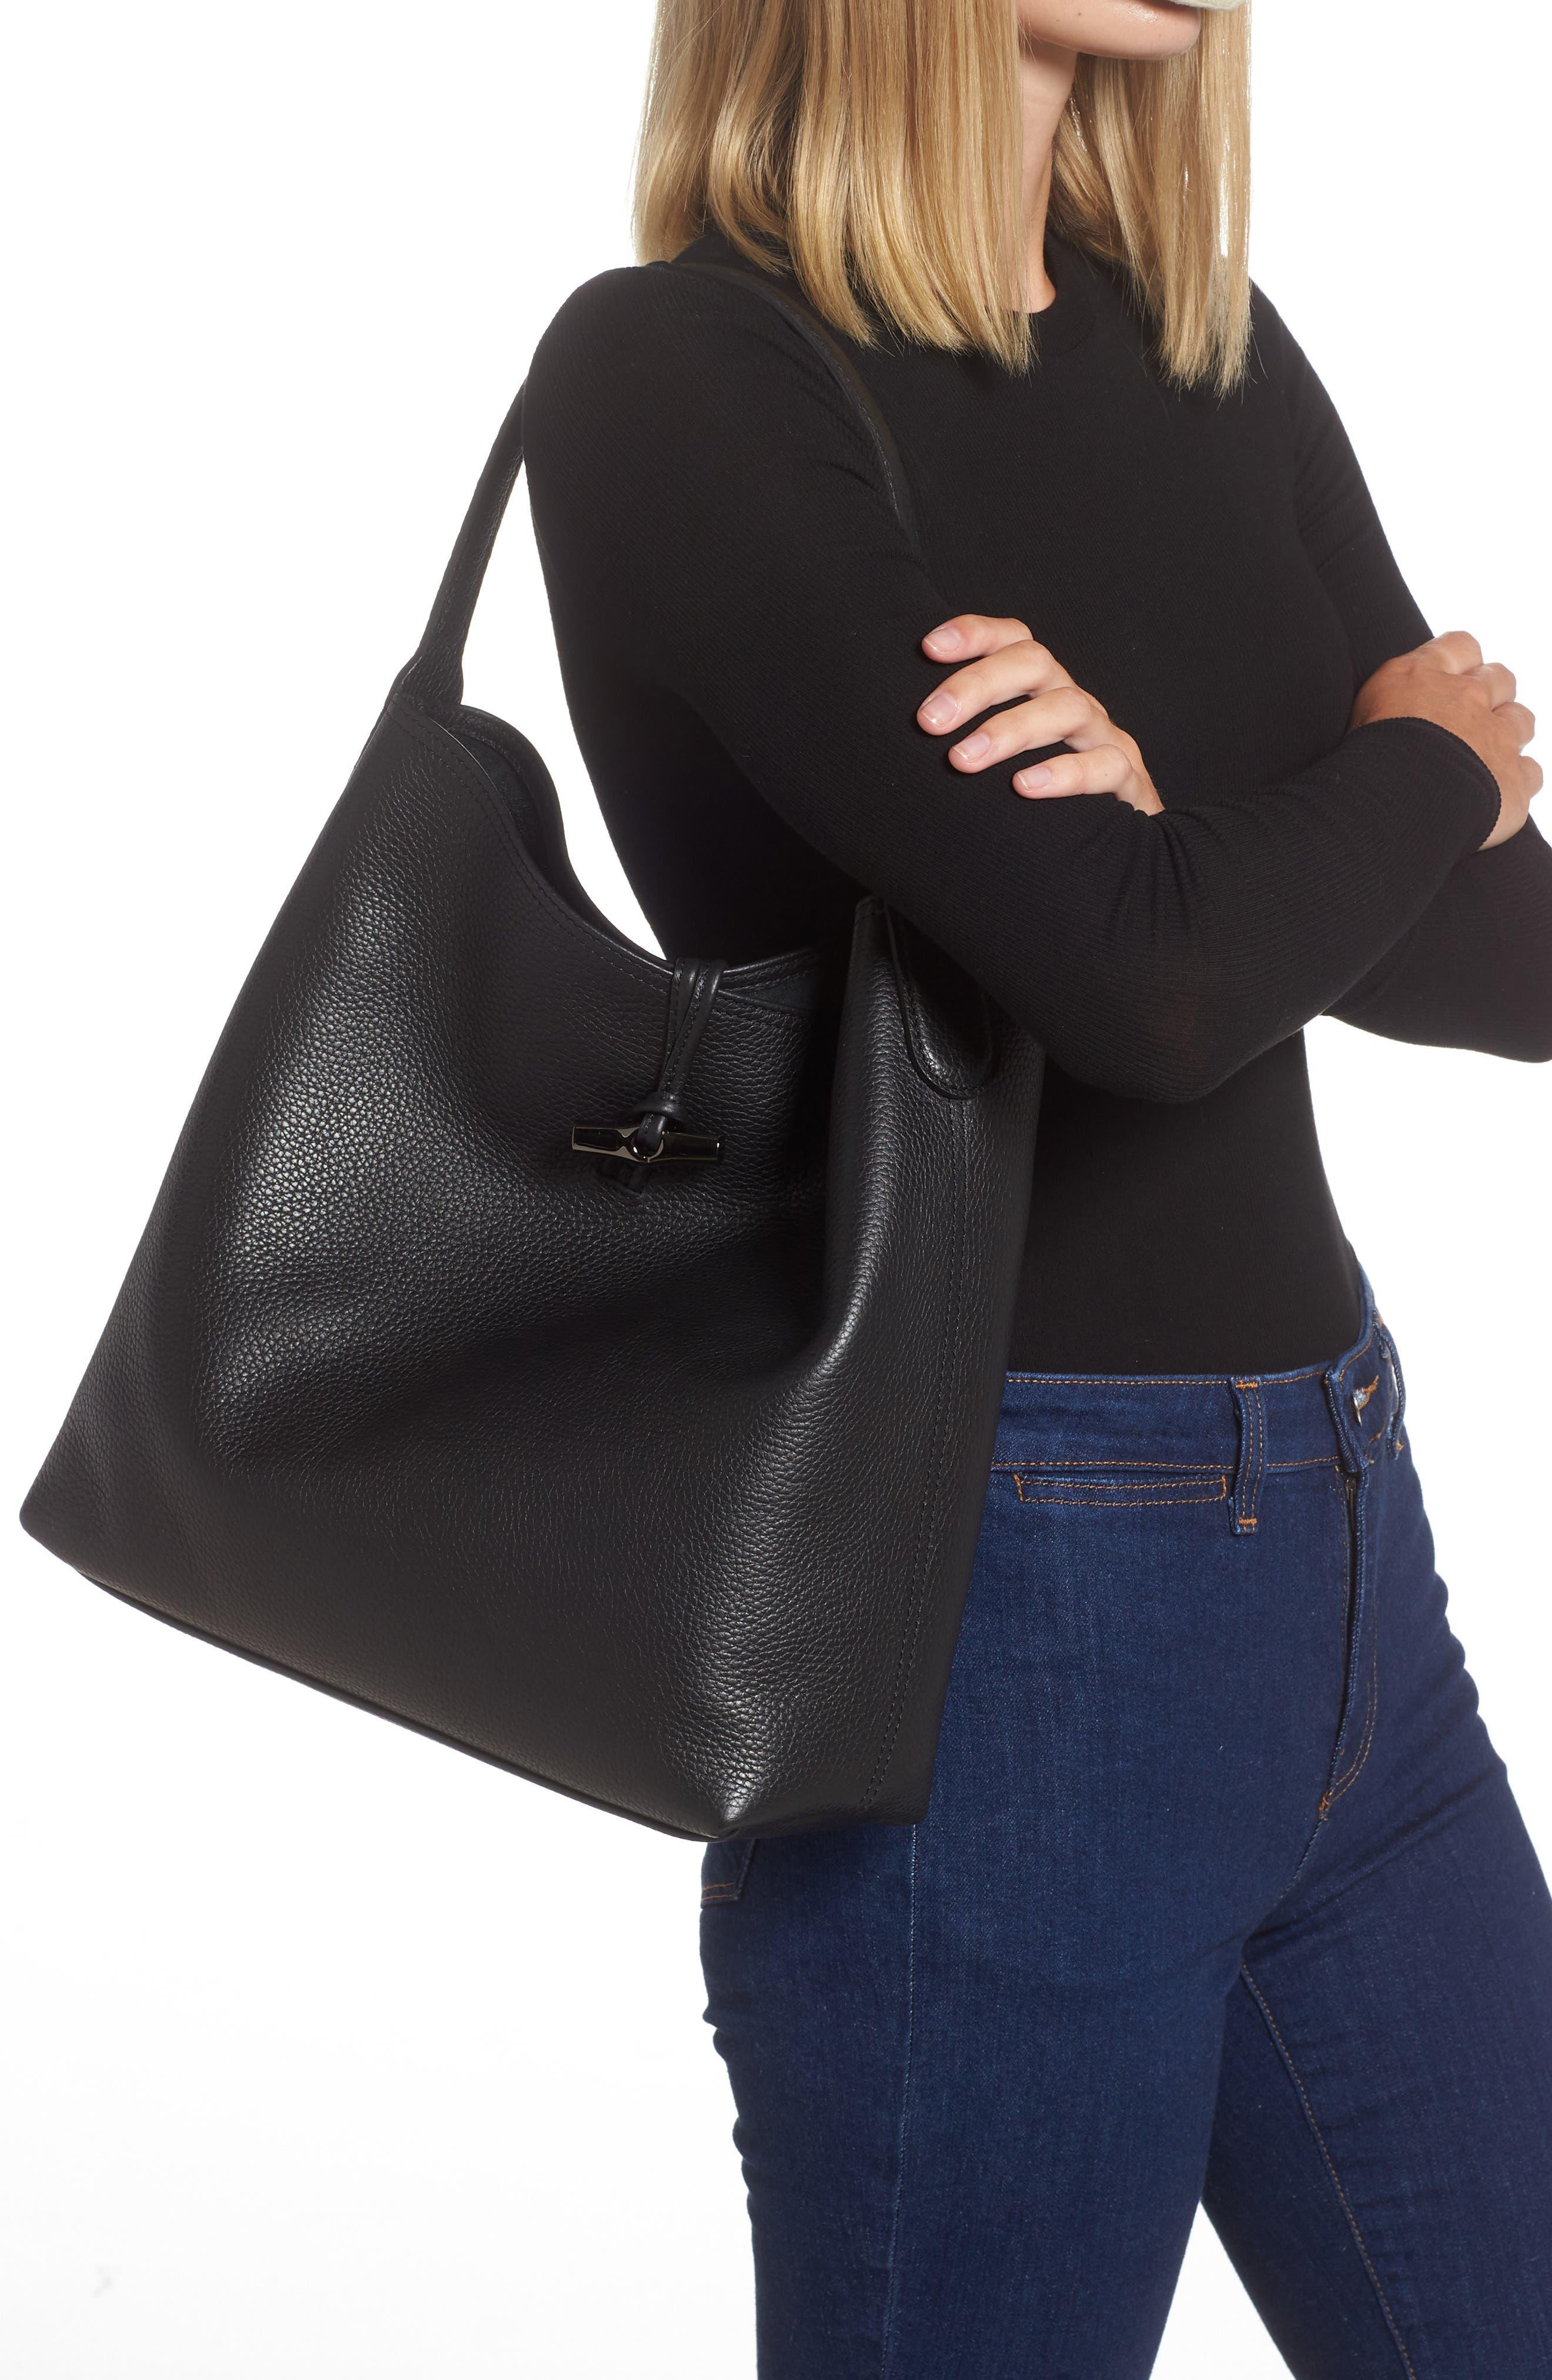 Longchamp Roseau Leather Shoulder Tote Handbag